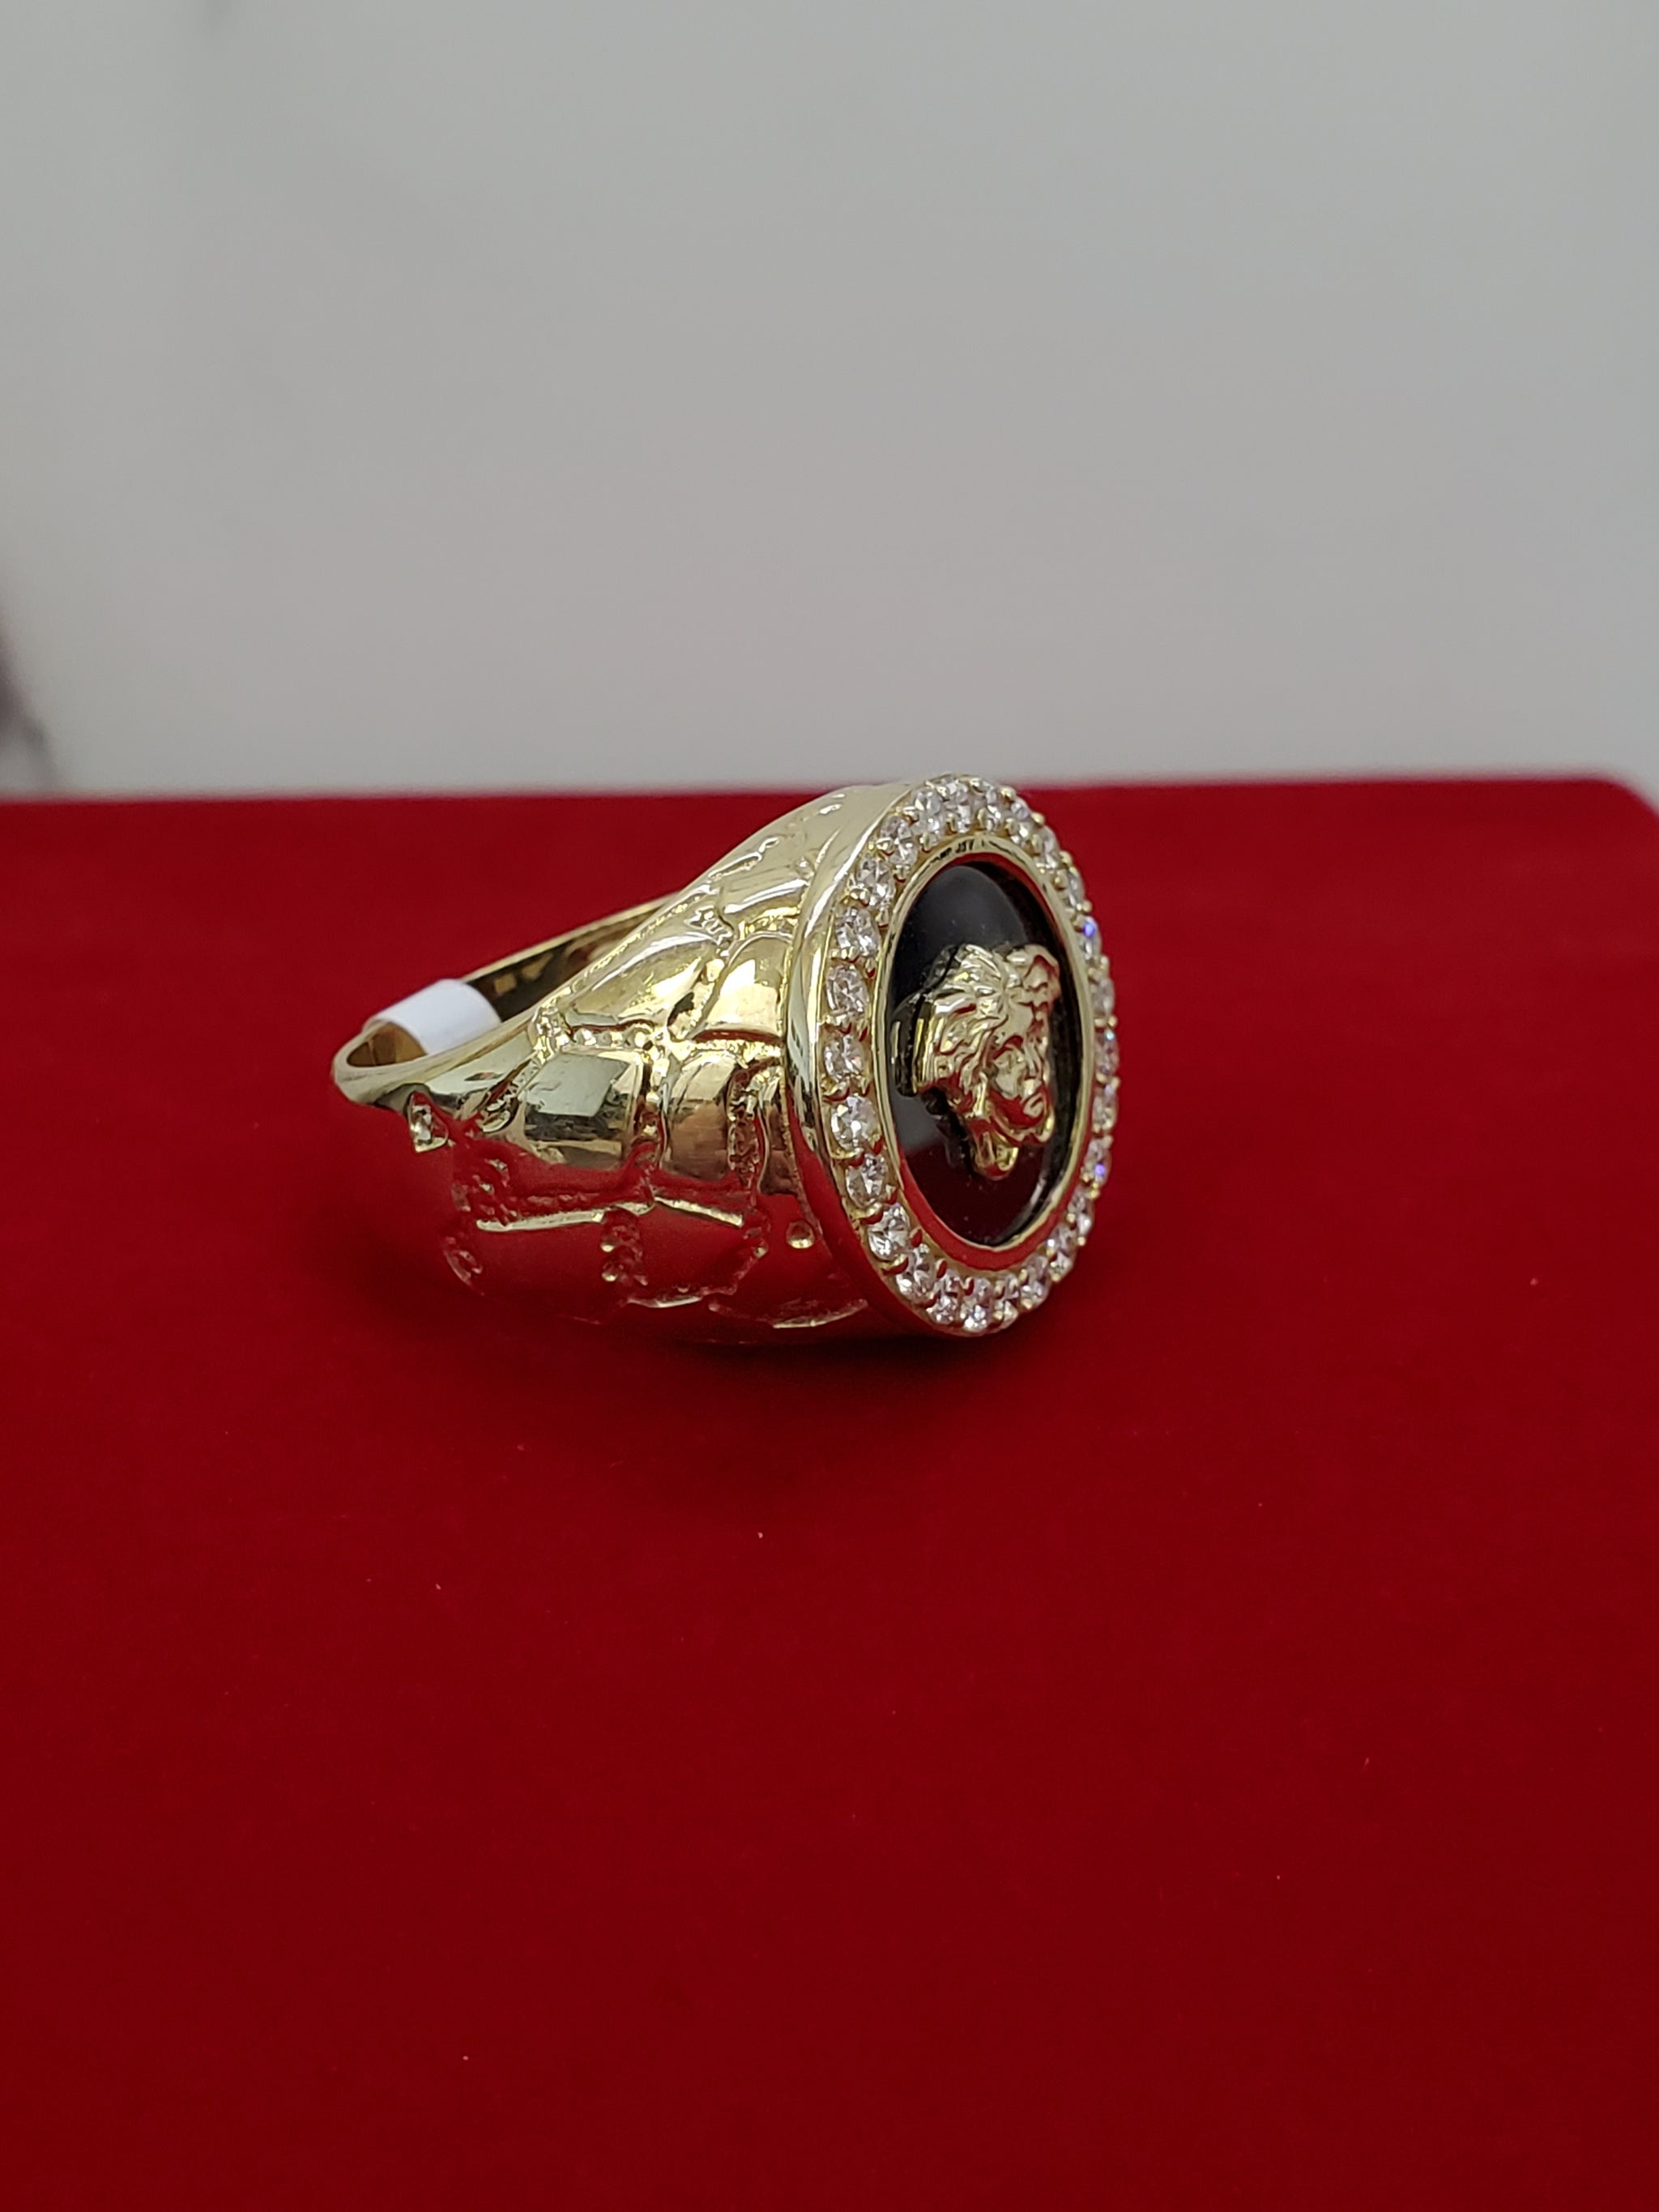 Men's Designer Jewelry | VERSACE US | Versace ring mens, Gold rings  fashion, Rings for men